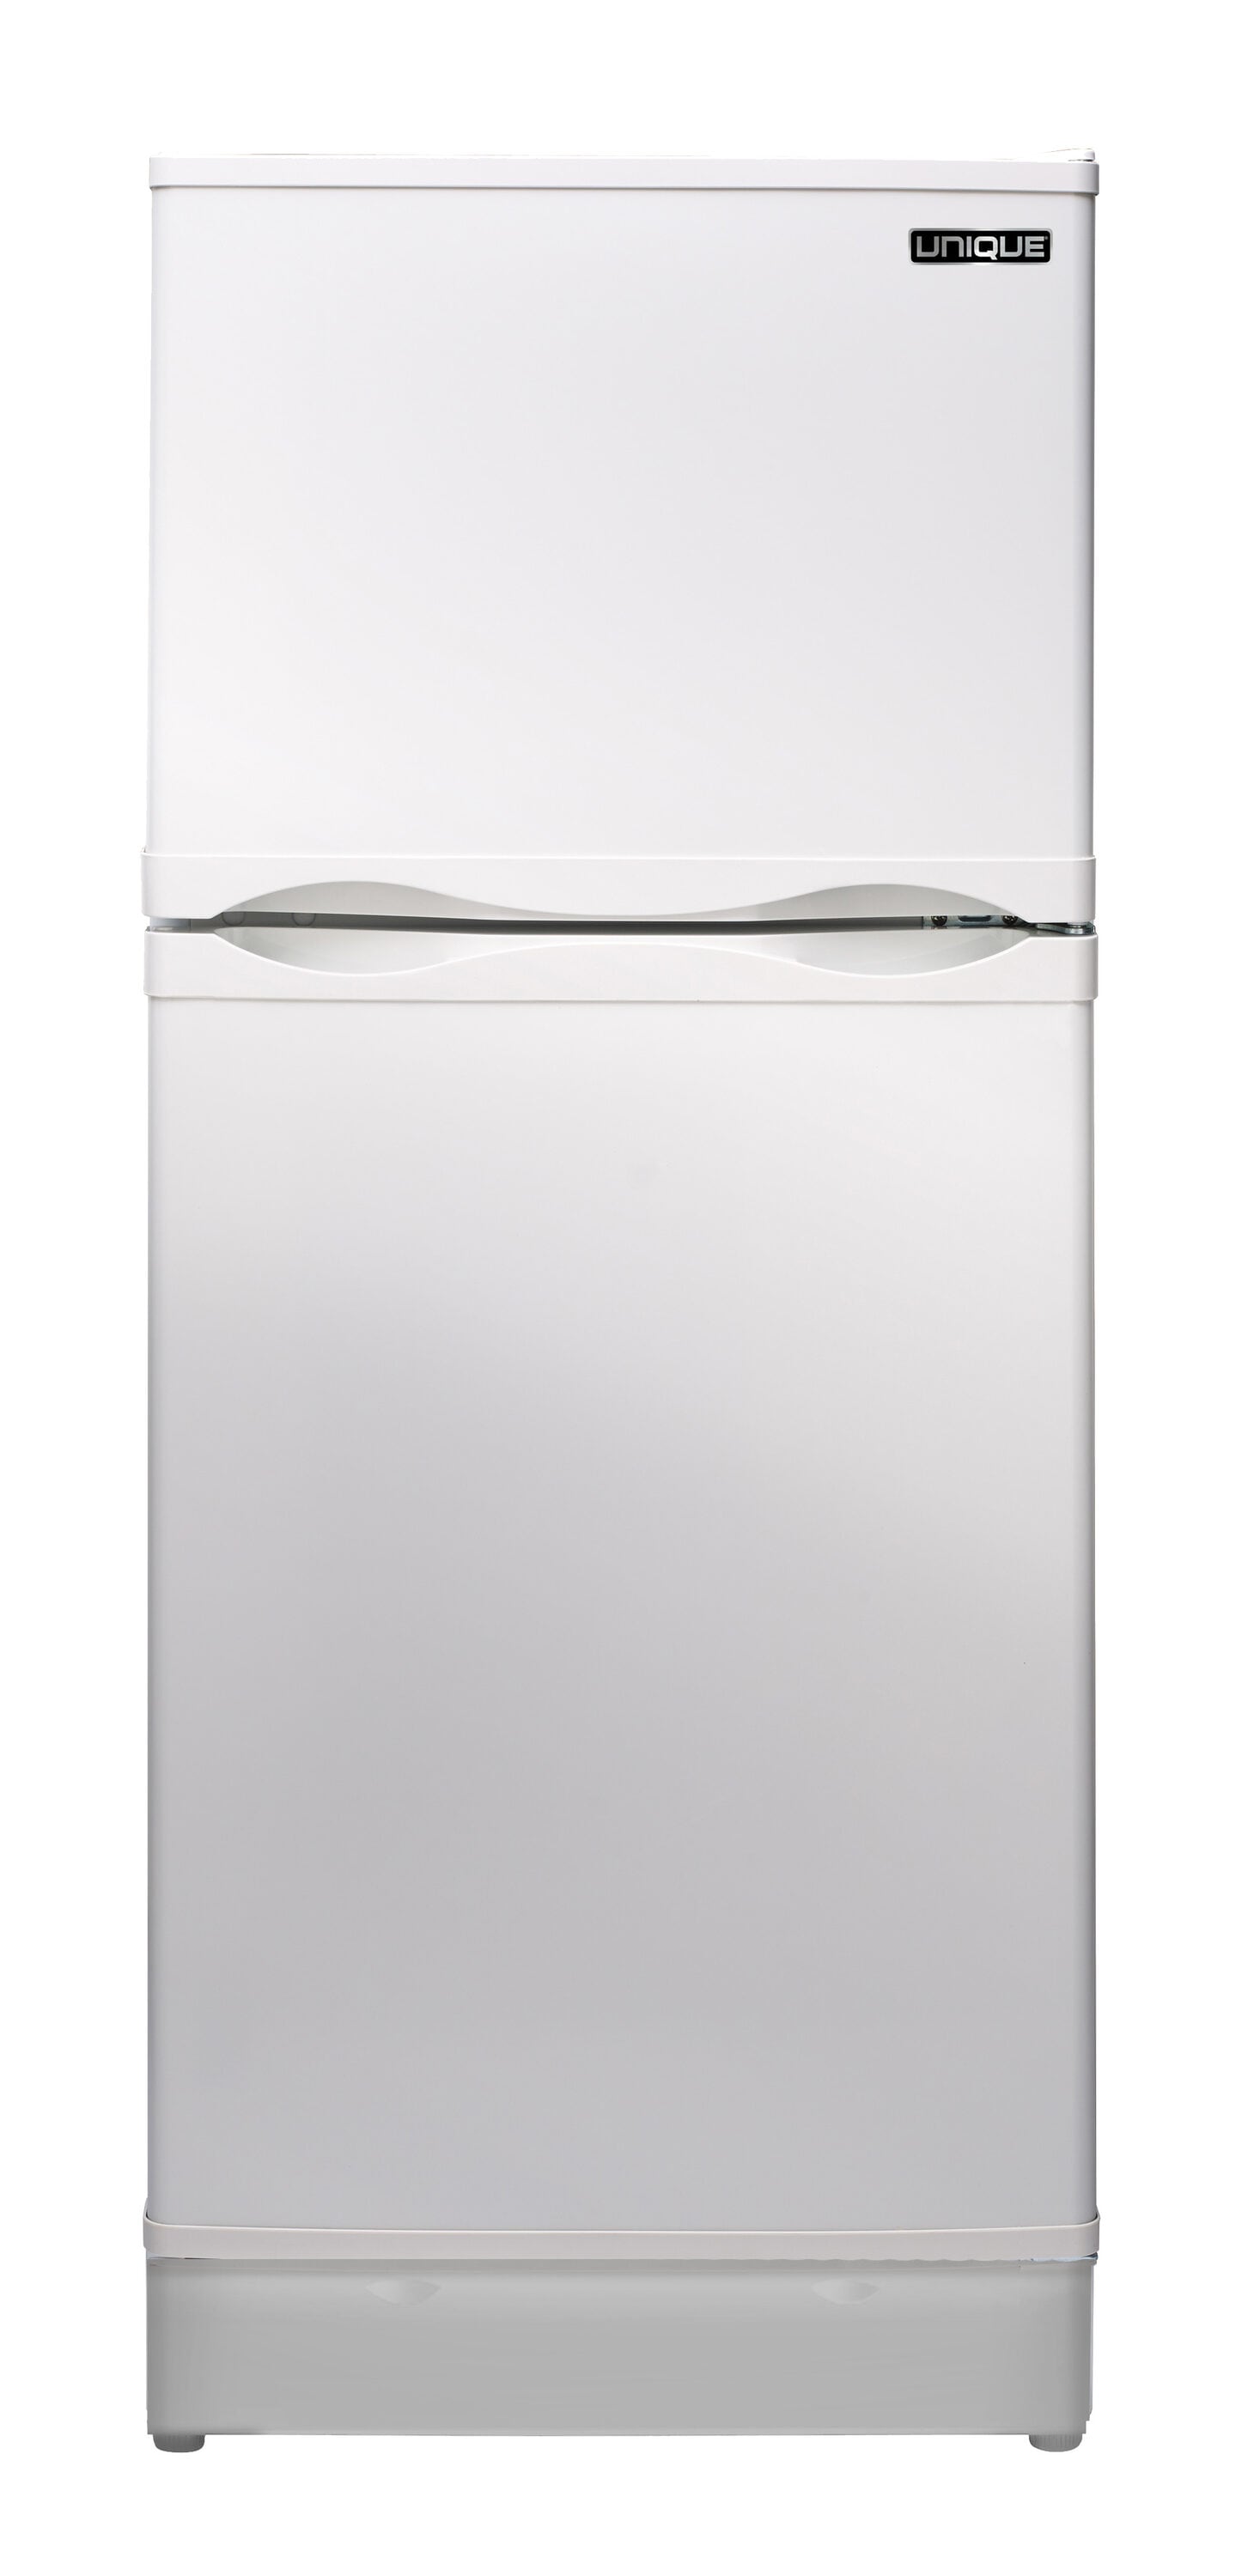 Hamilton Beach 15.6 Counter Depth Full Size Refrigerator HBF1558